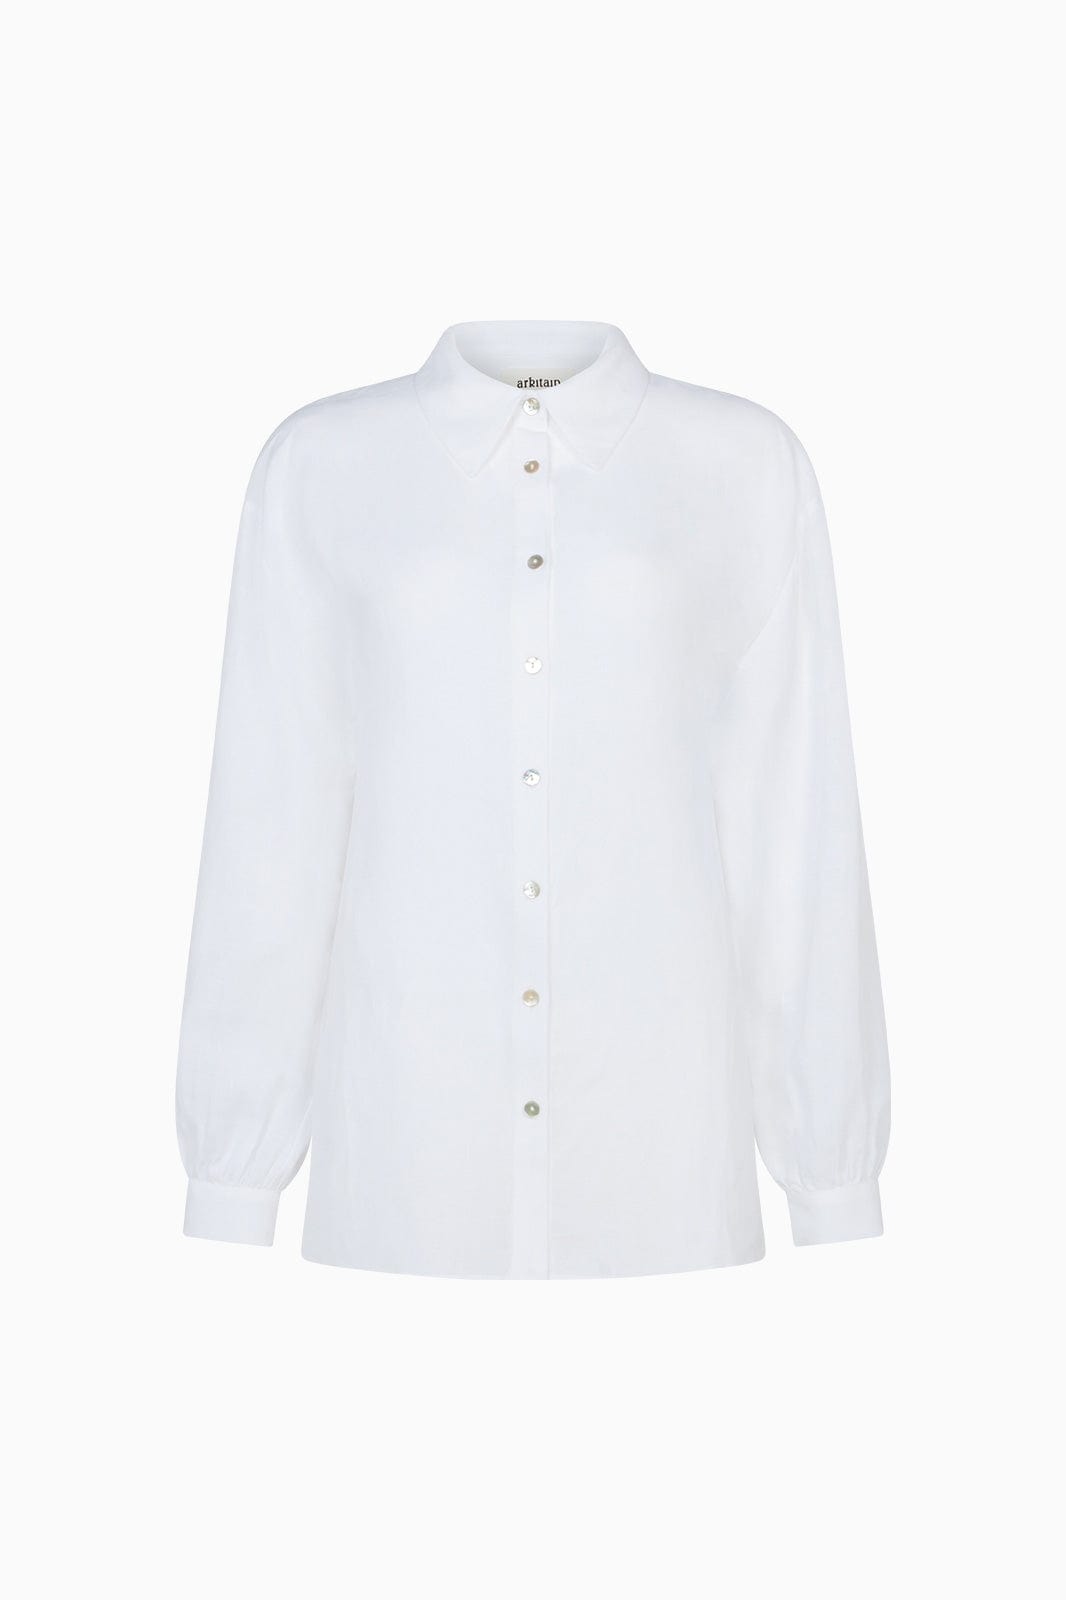 arkitaip Blouses S / White The Blanca Oversized Shirt in white - Sample